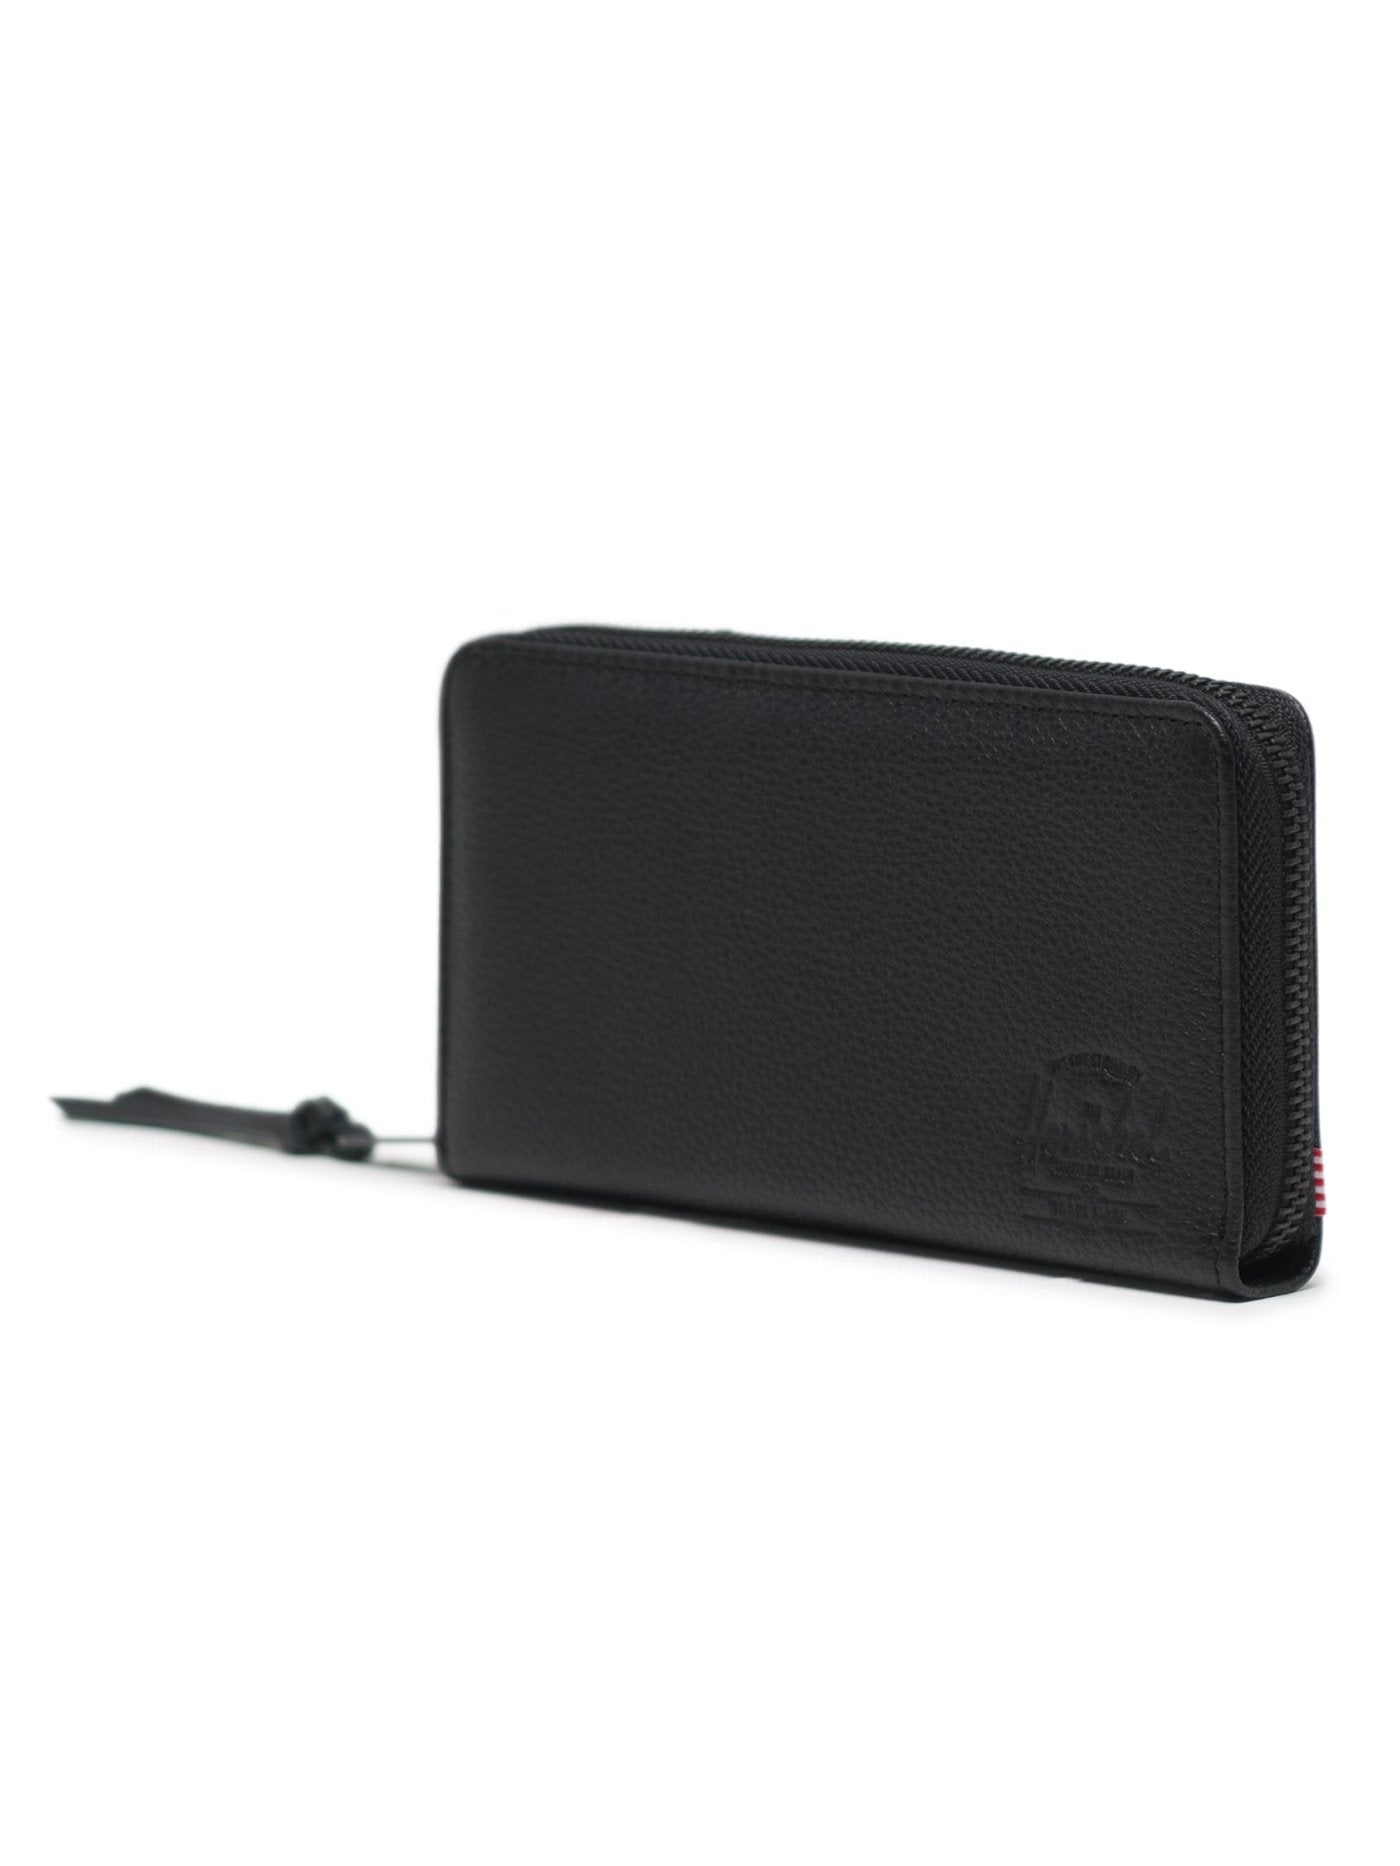 Herschel Thomas Leather Wallet